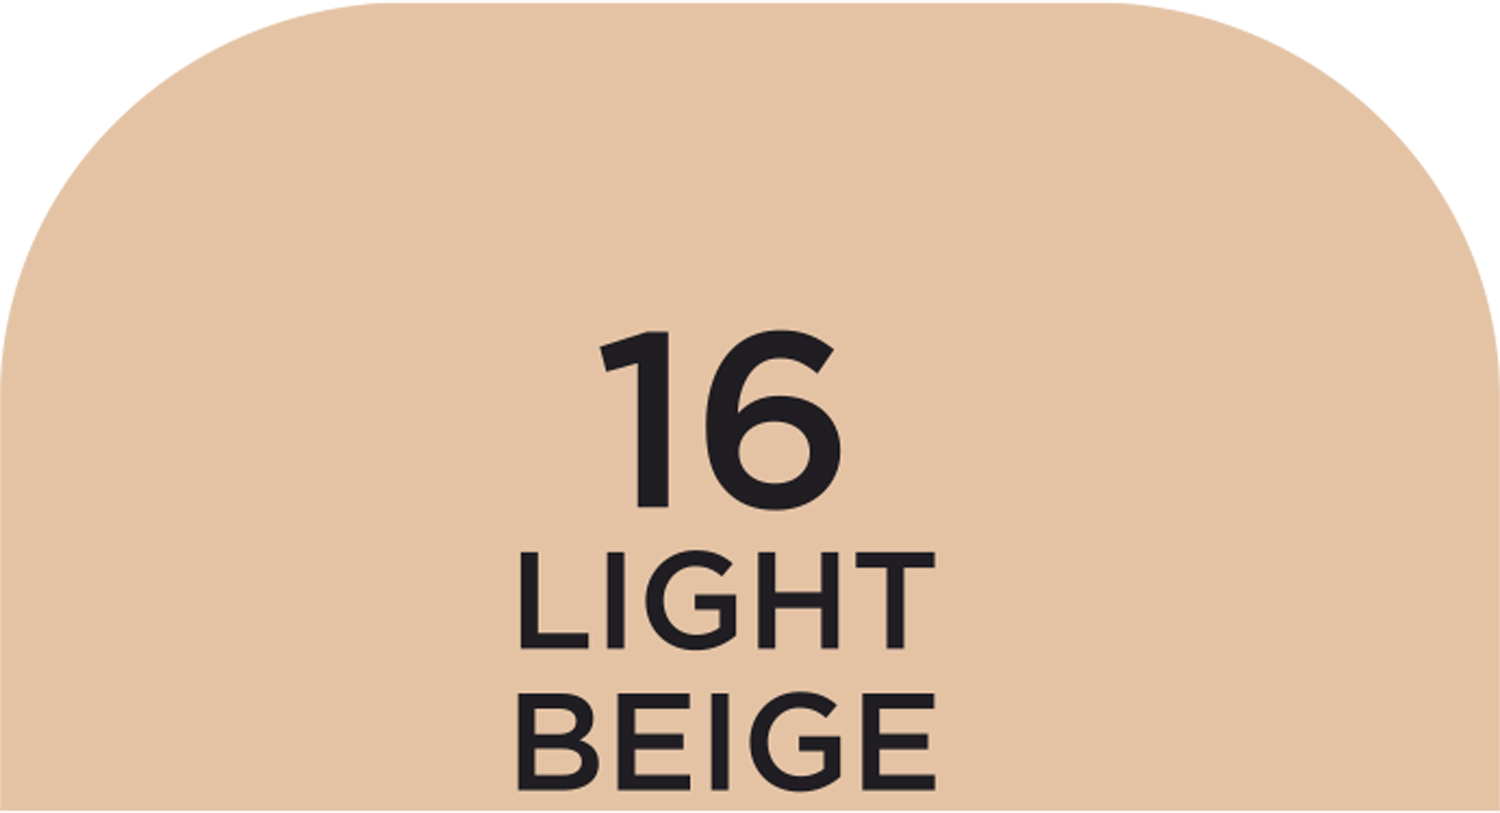 16 LIGHT BEIGE